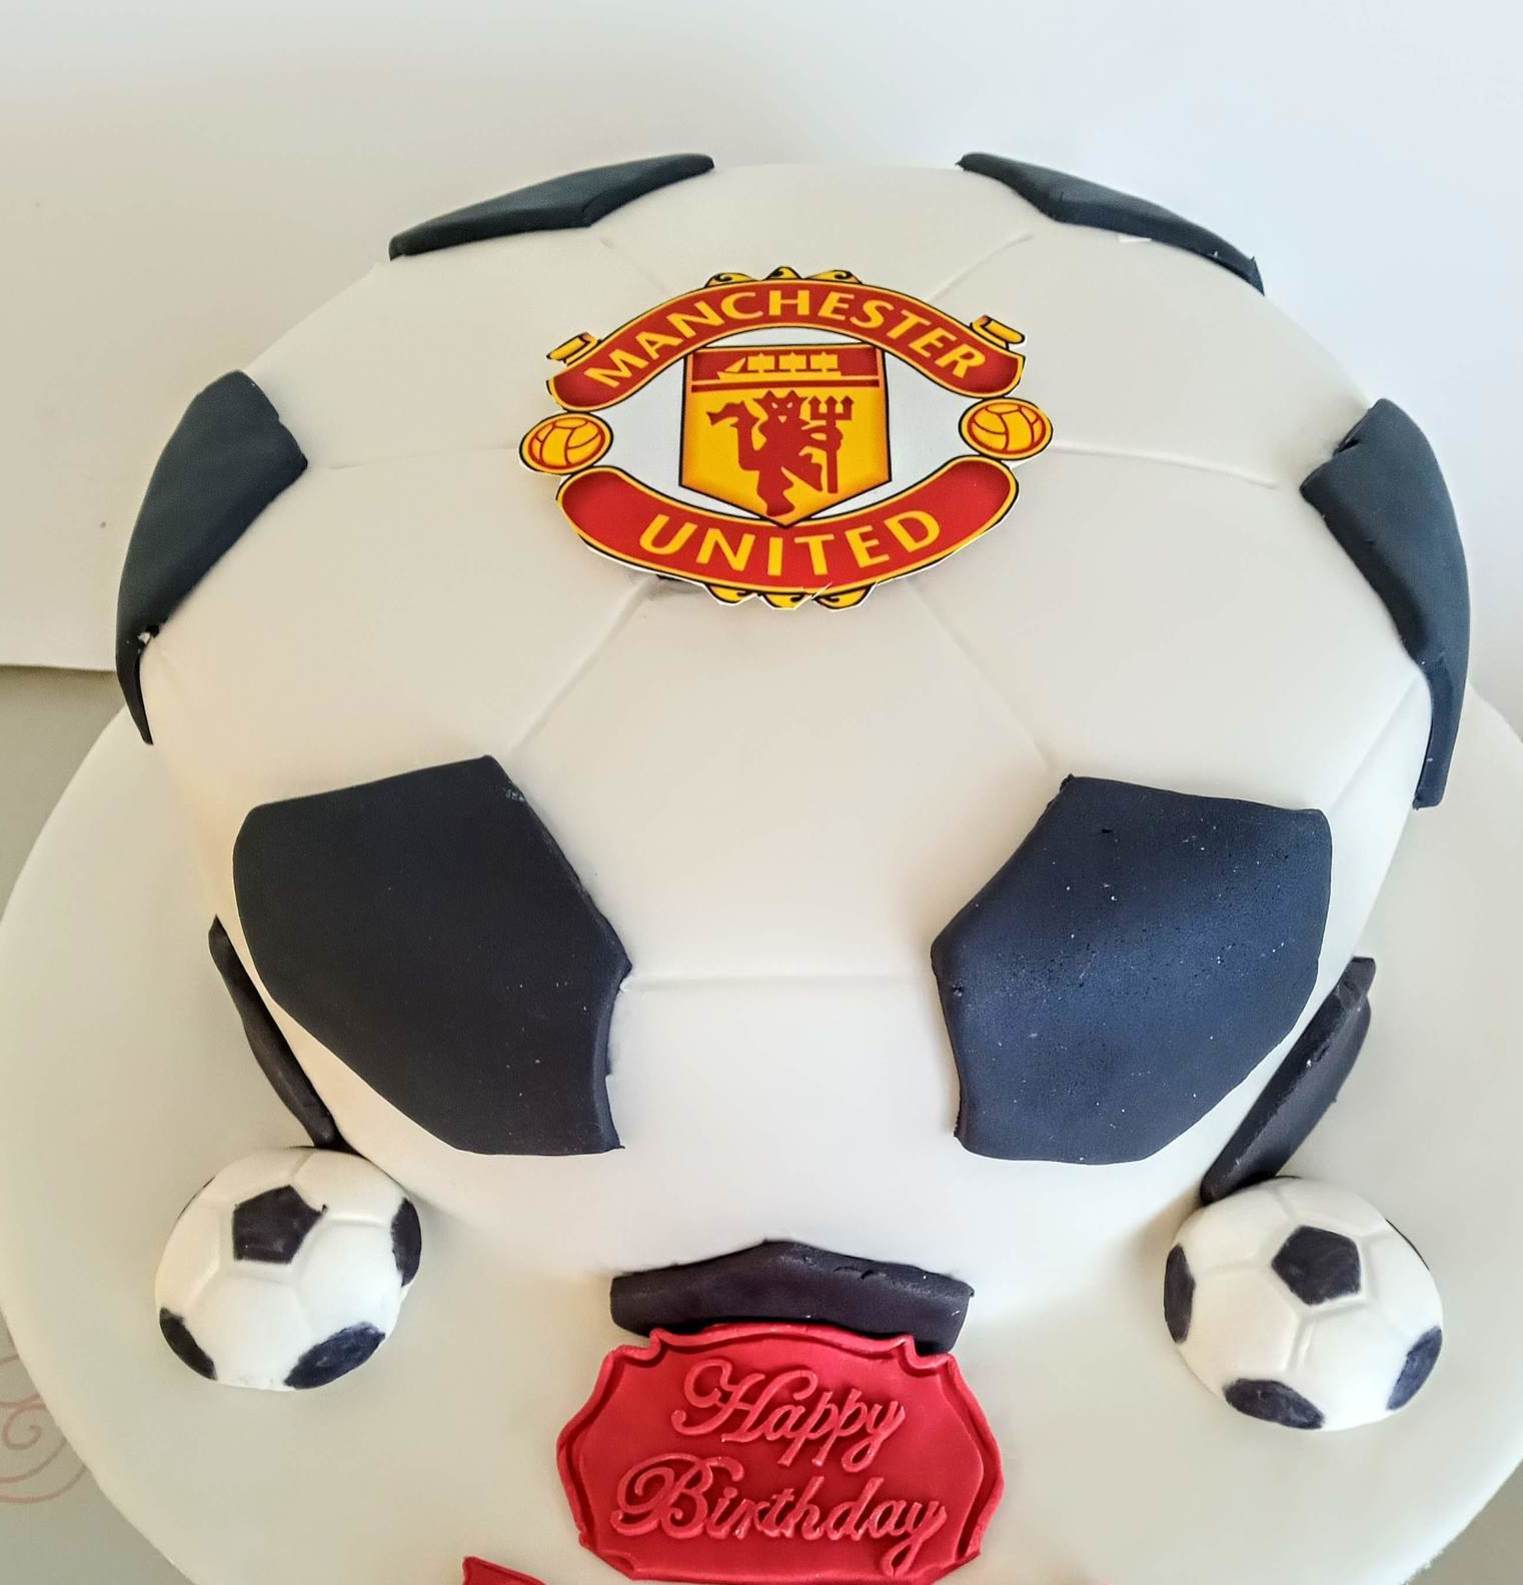 Football club themed birthday cake